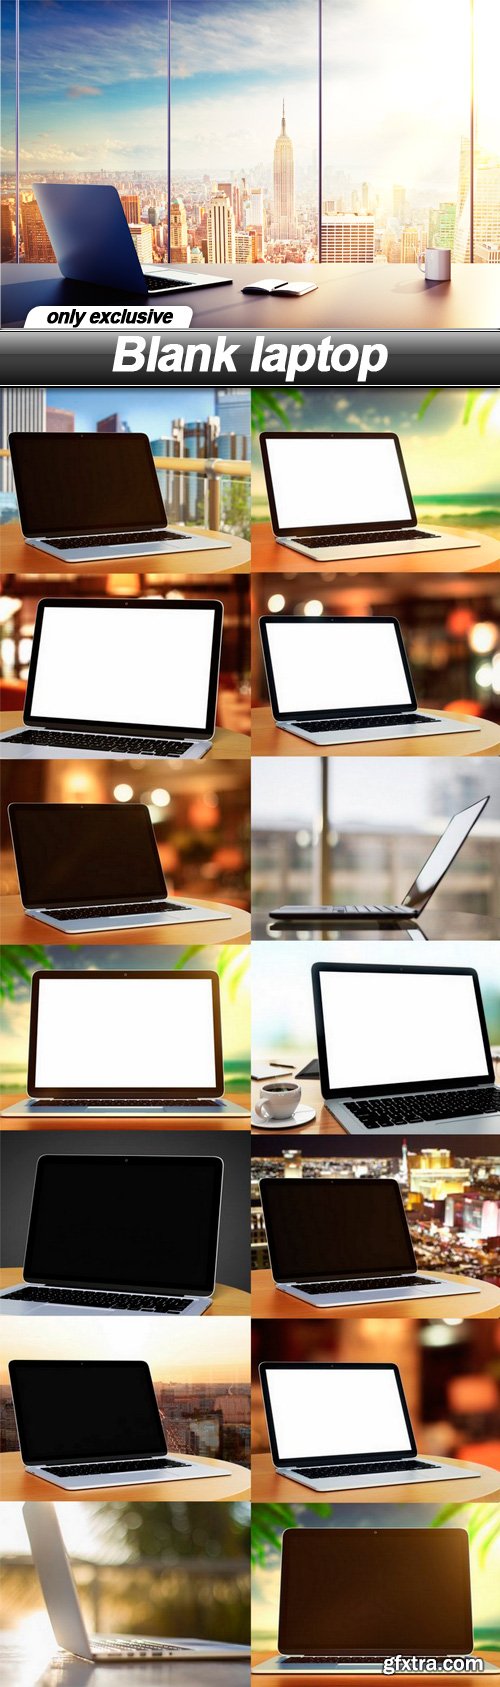 Blank laptop - 15 UHQ JPEG